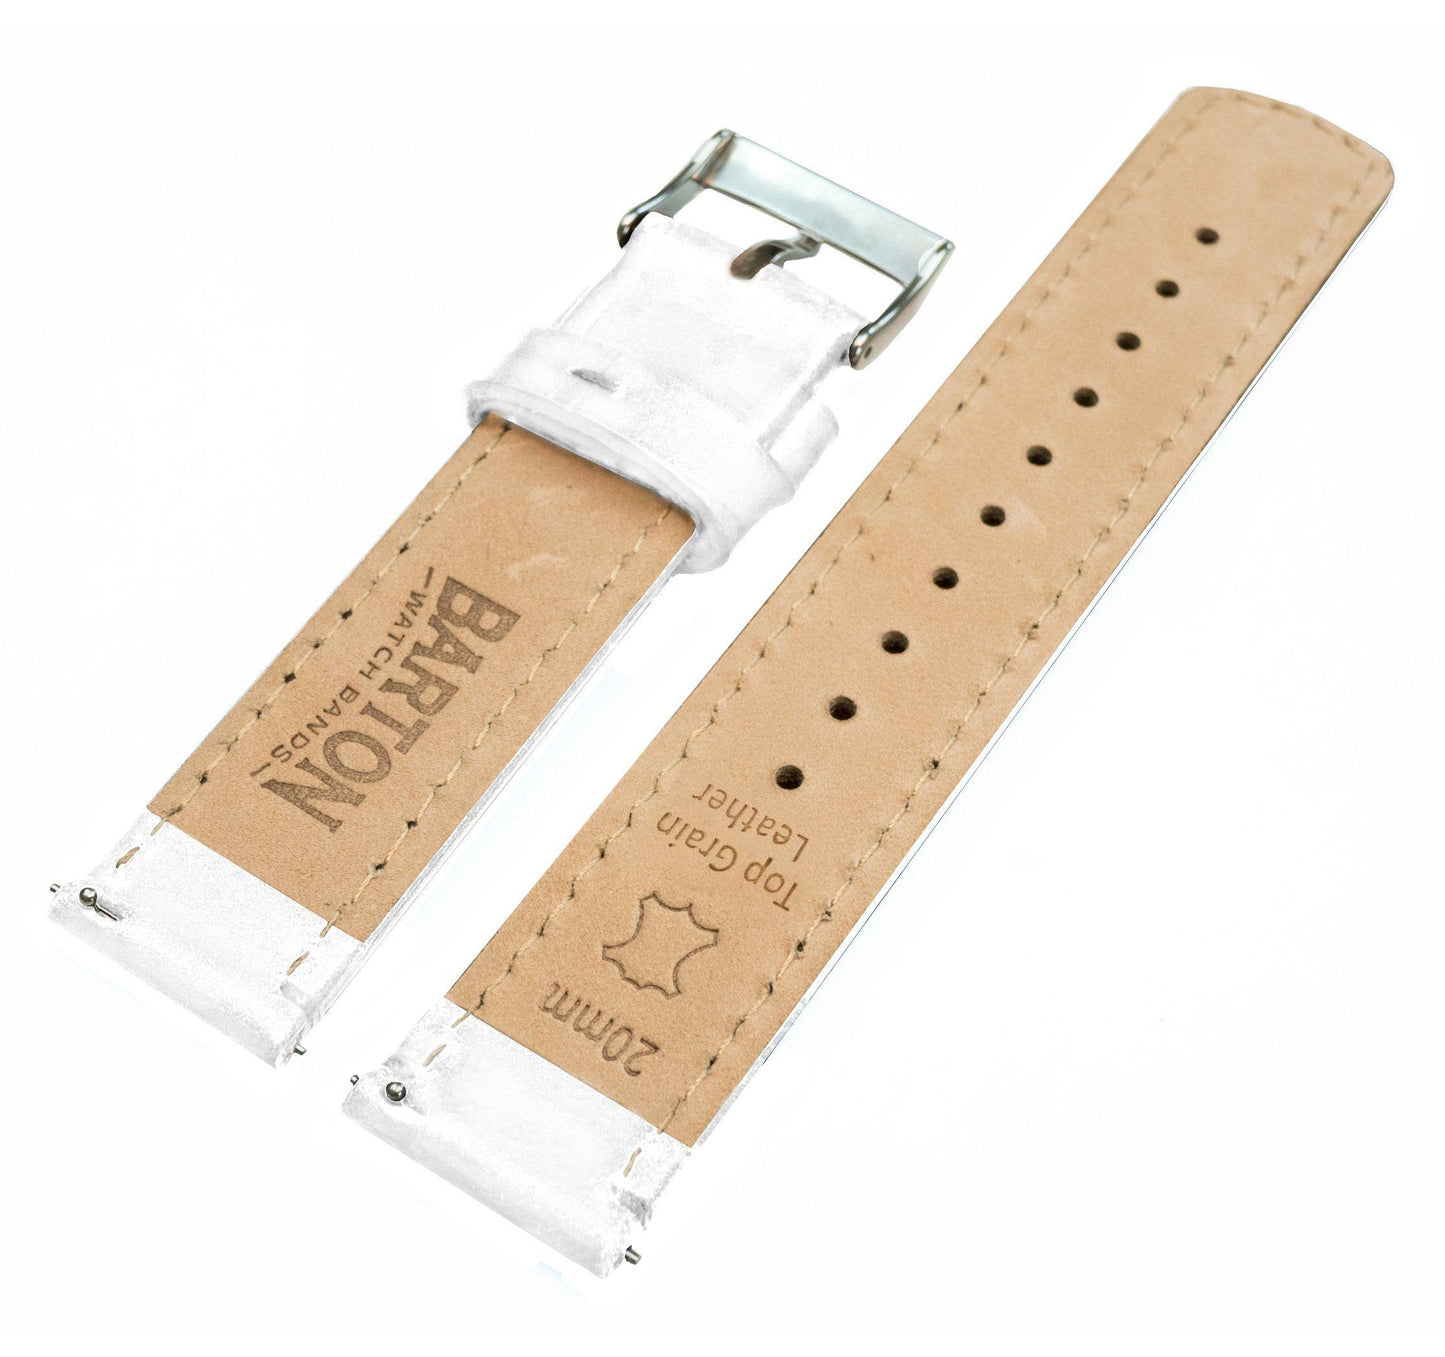 Samsung Galaxy Watch Active | White Leather & Stitching - Barton Watch Bands